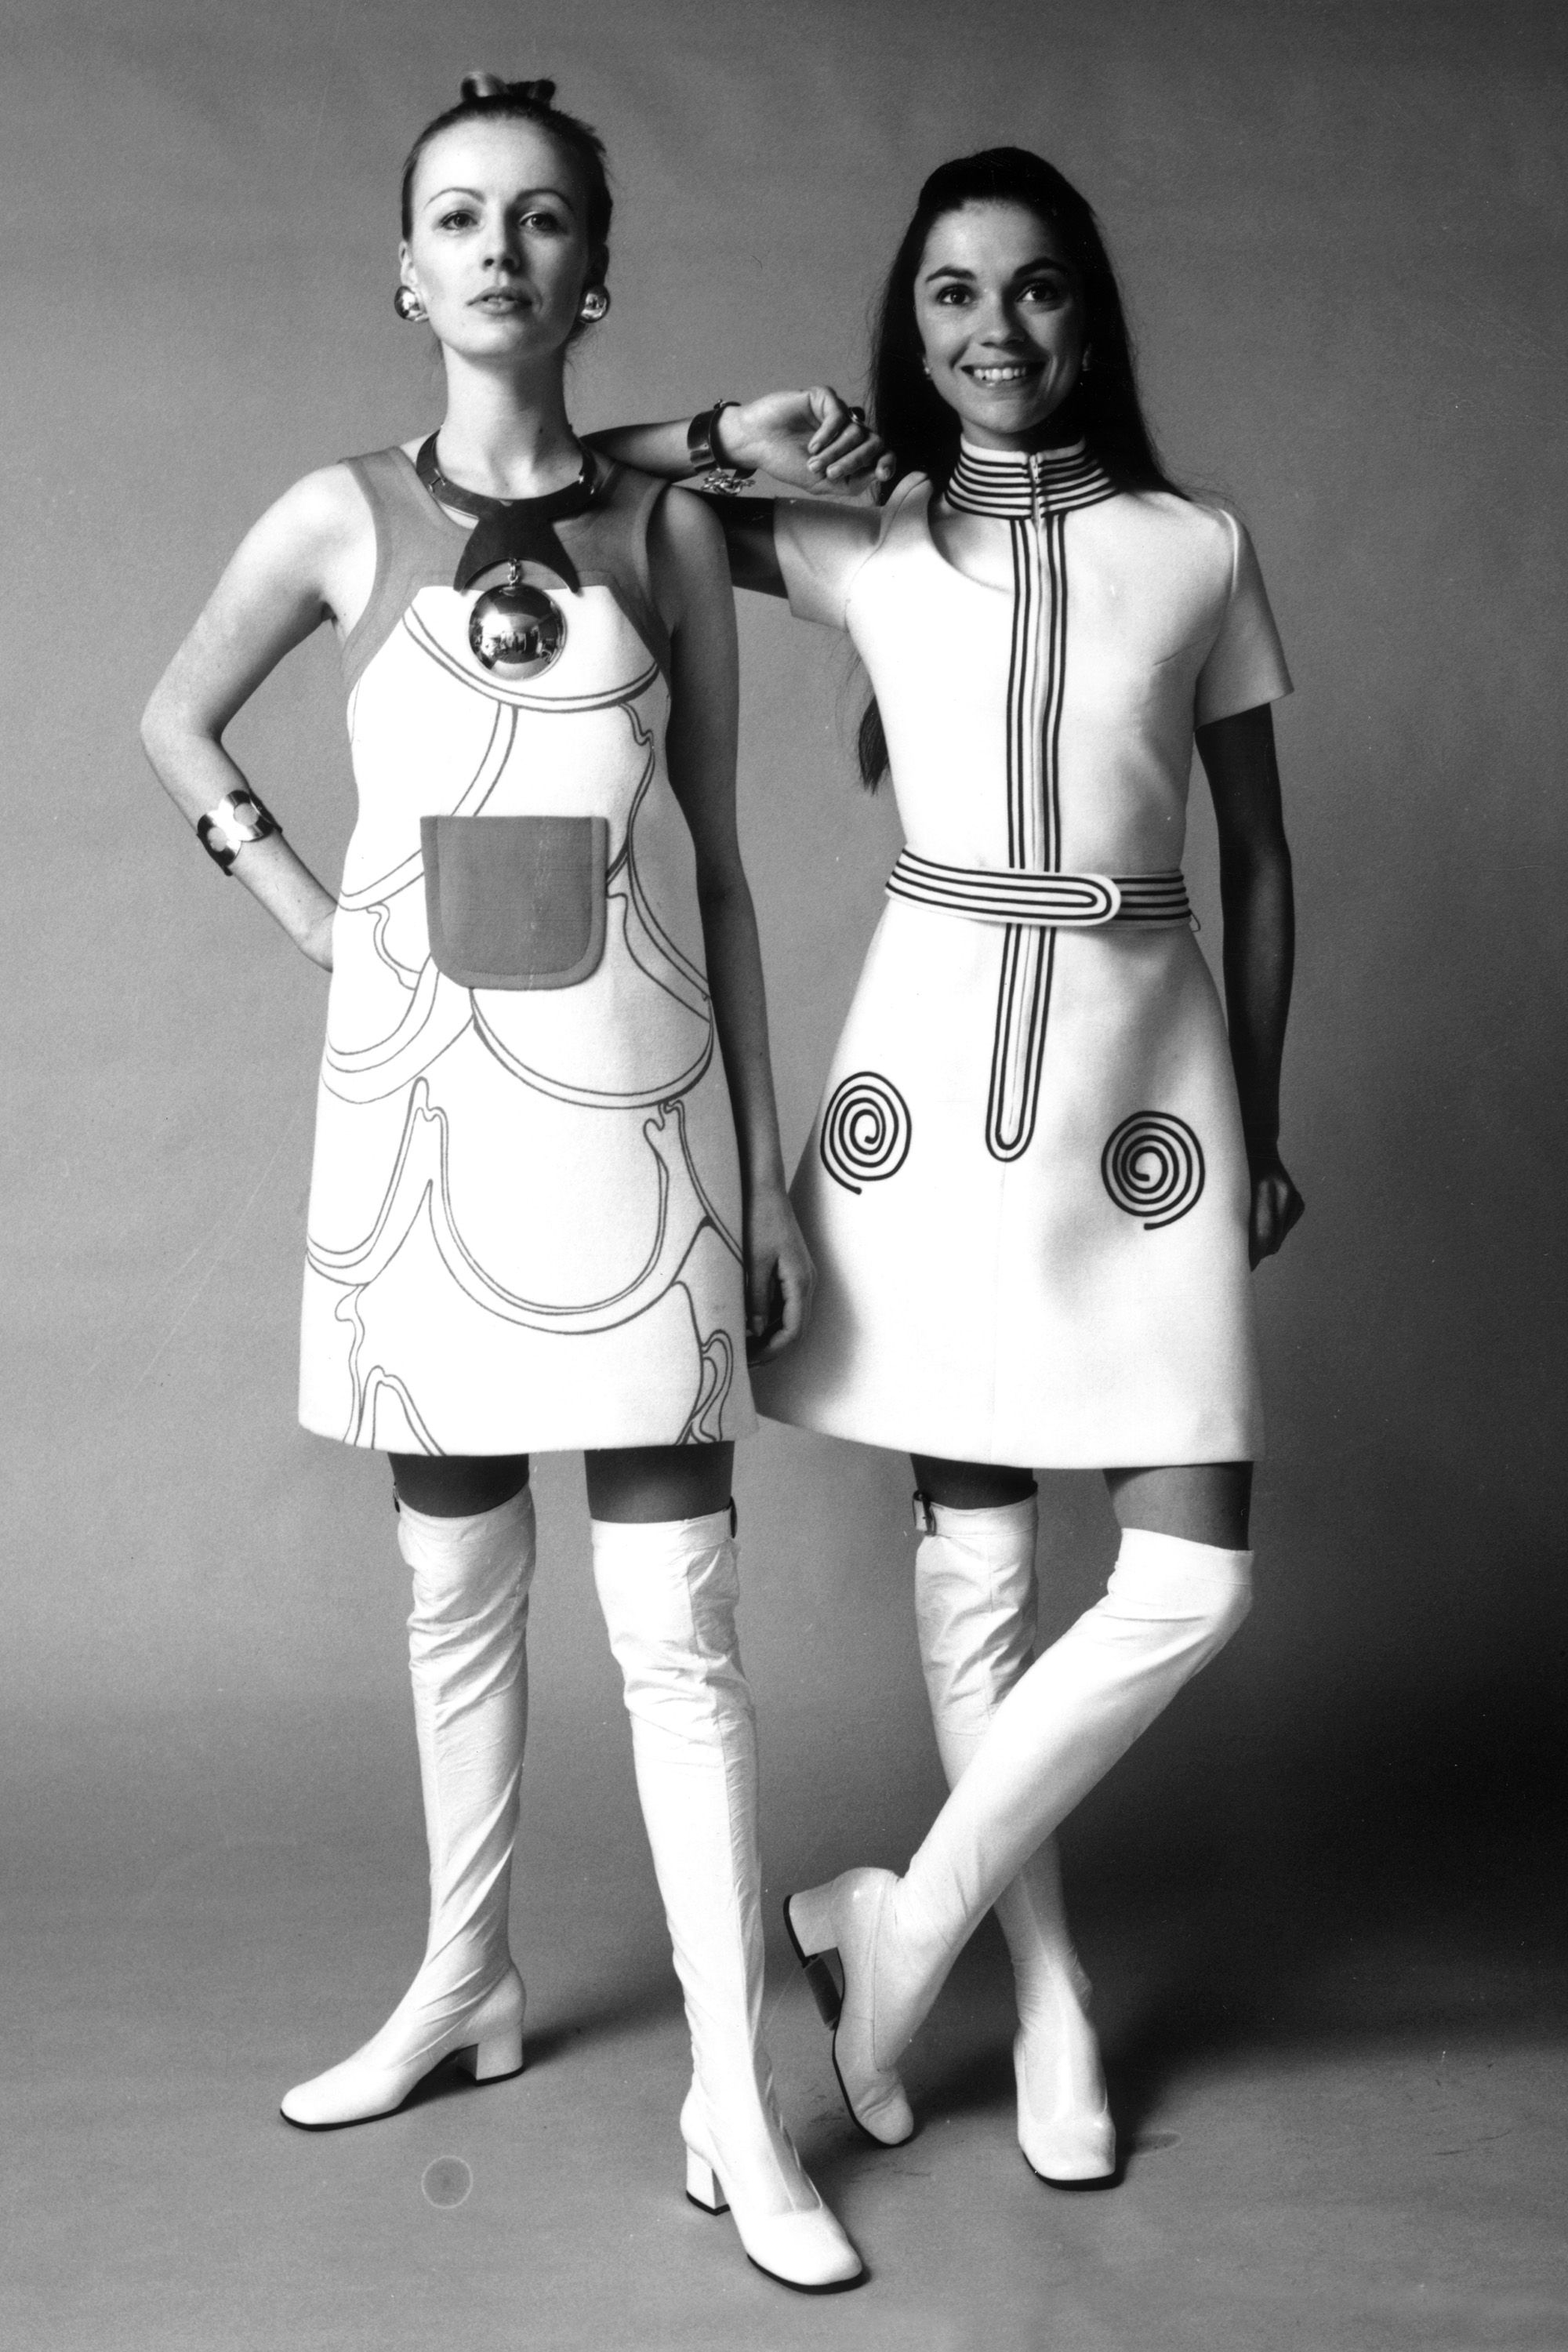 70s style mini dress